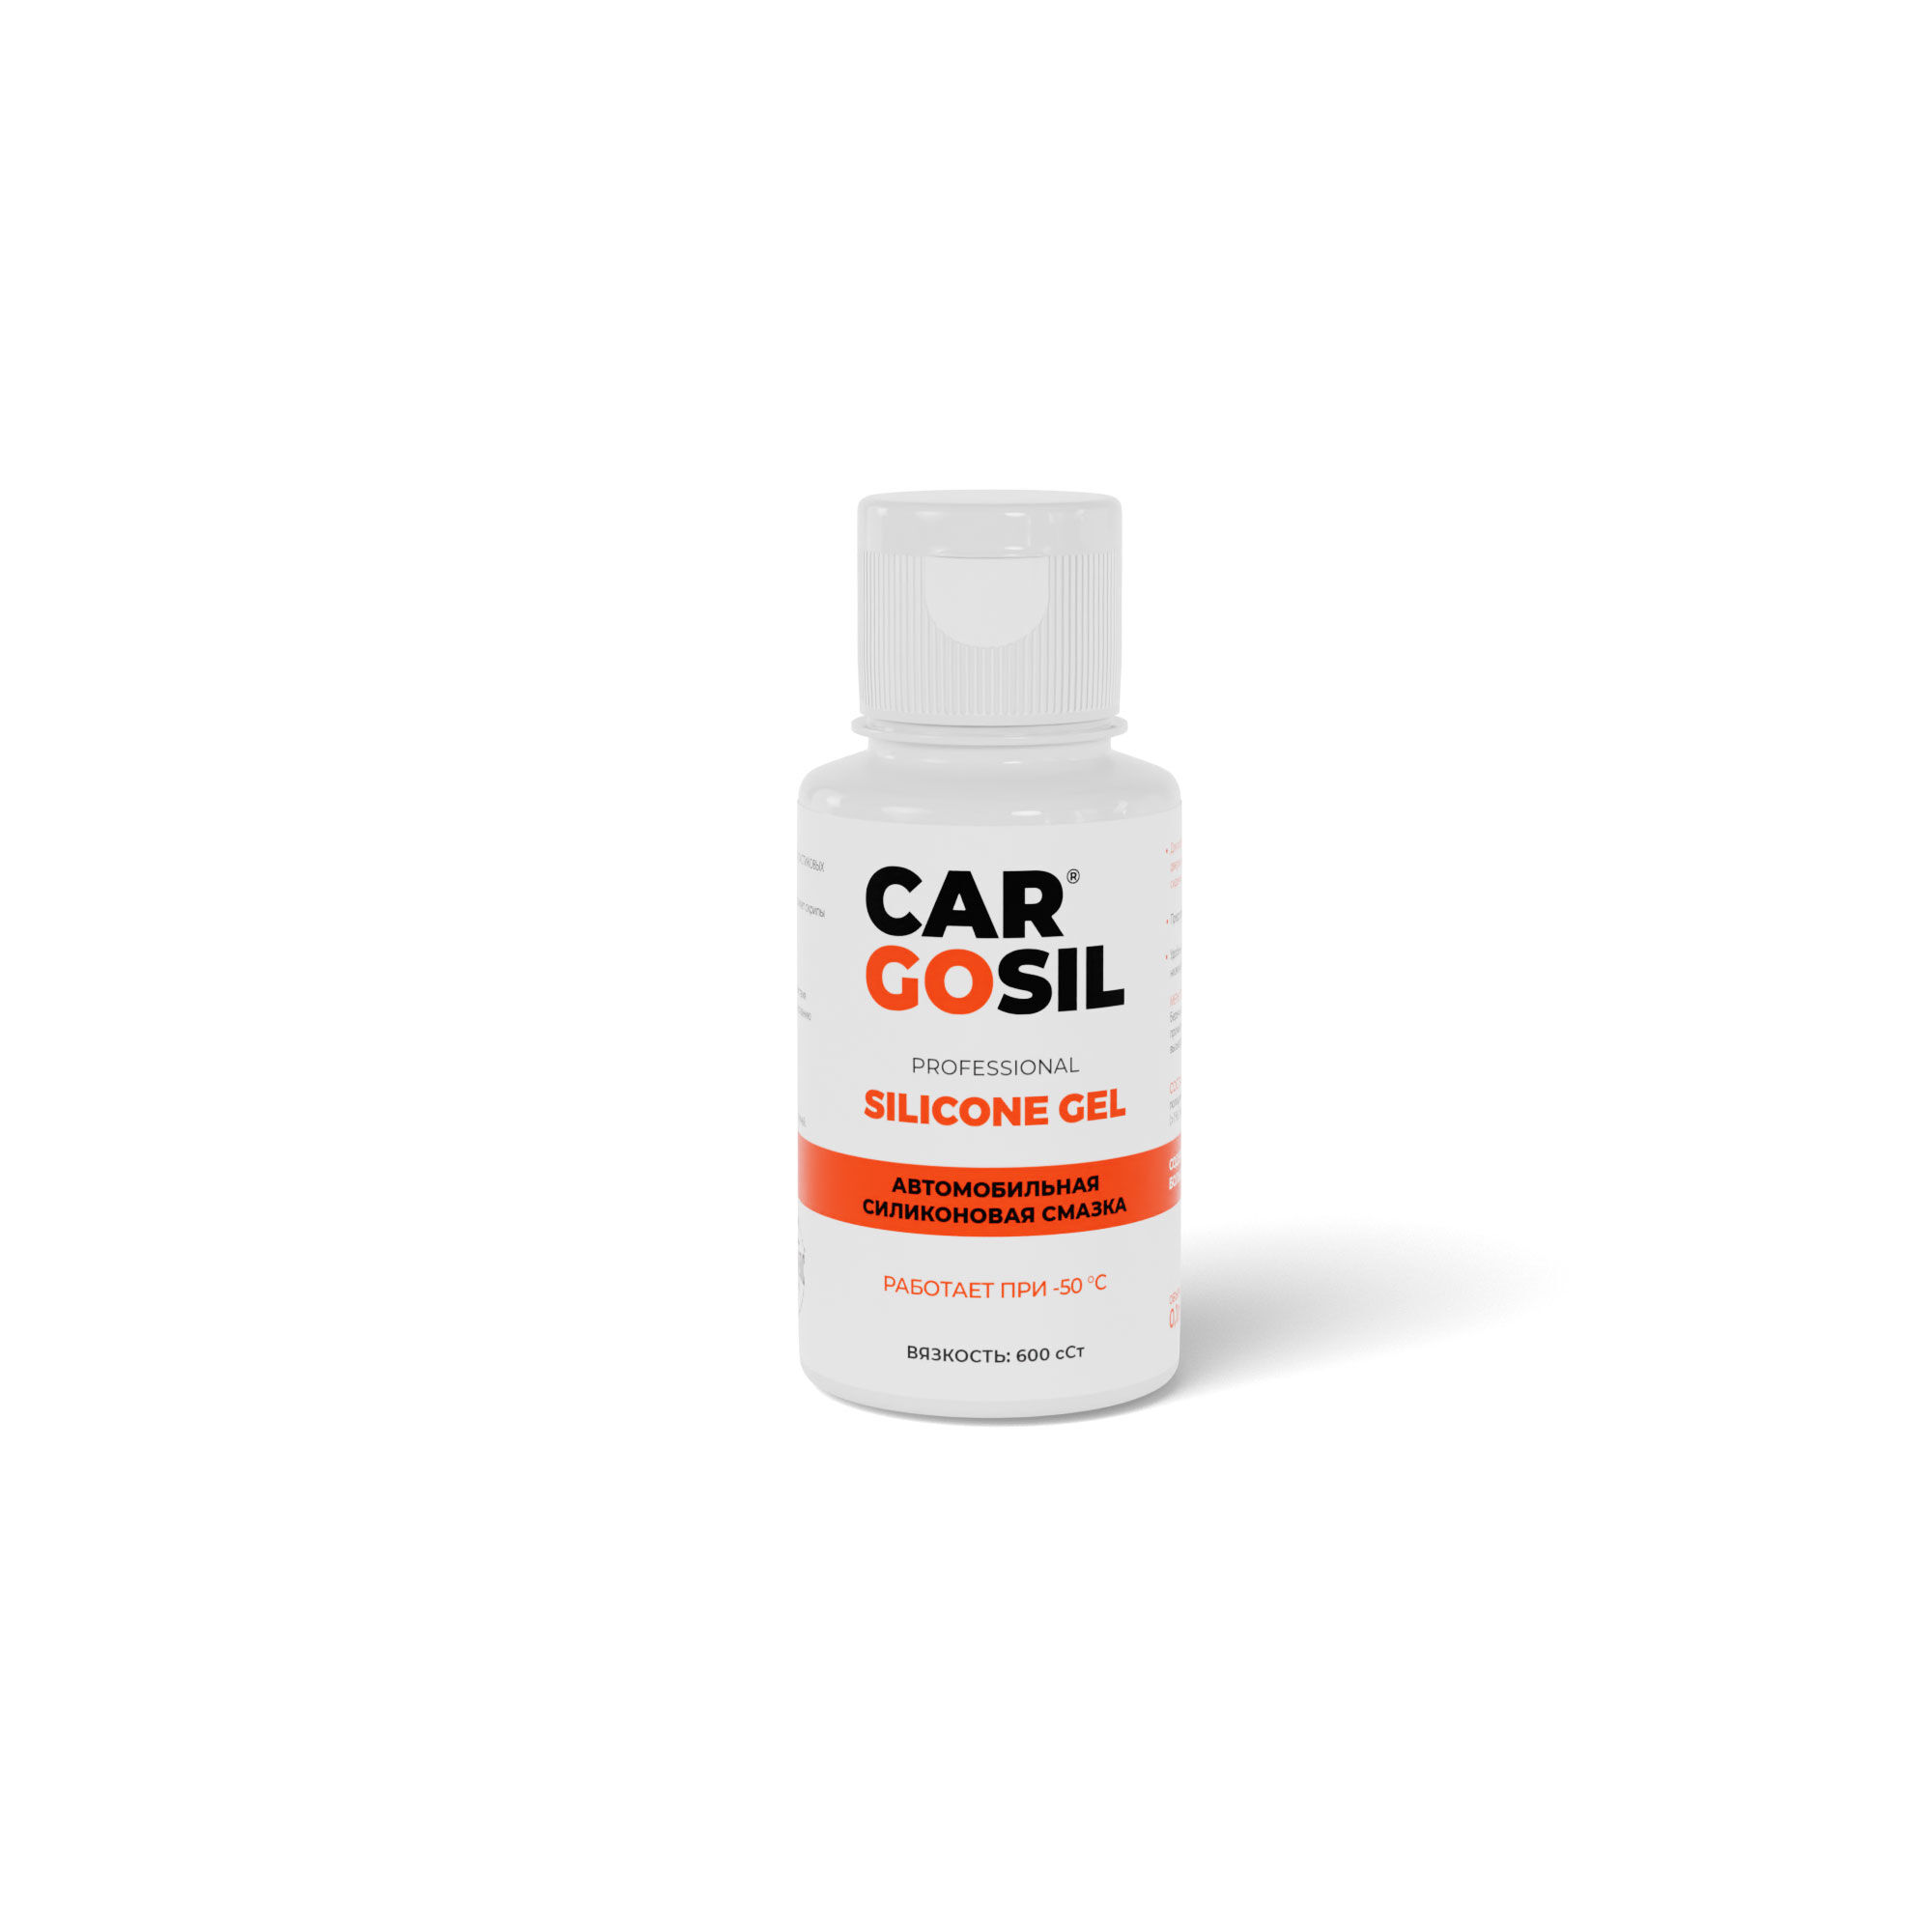 Автомобильная силиконовая смазка CARGOSIL prosessional silicone gel 600cCt 100ml